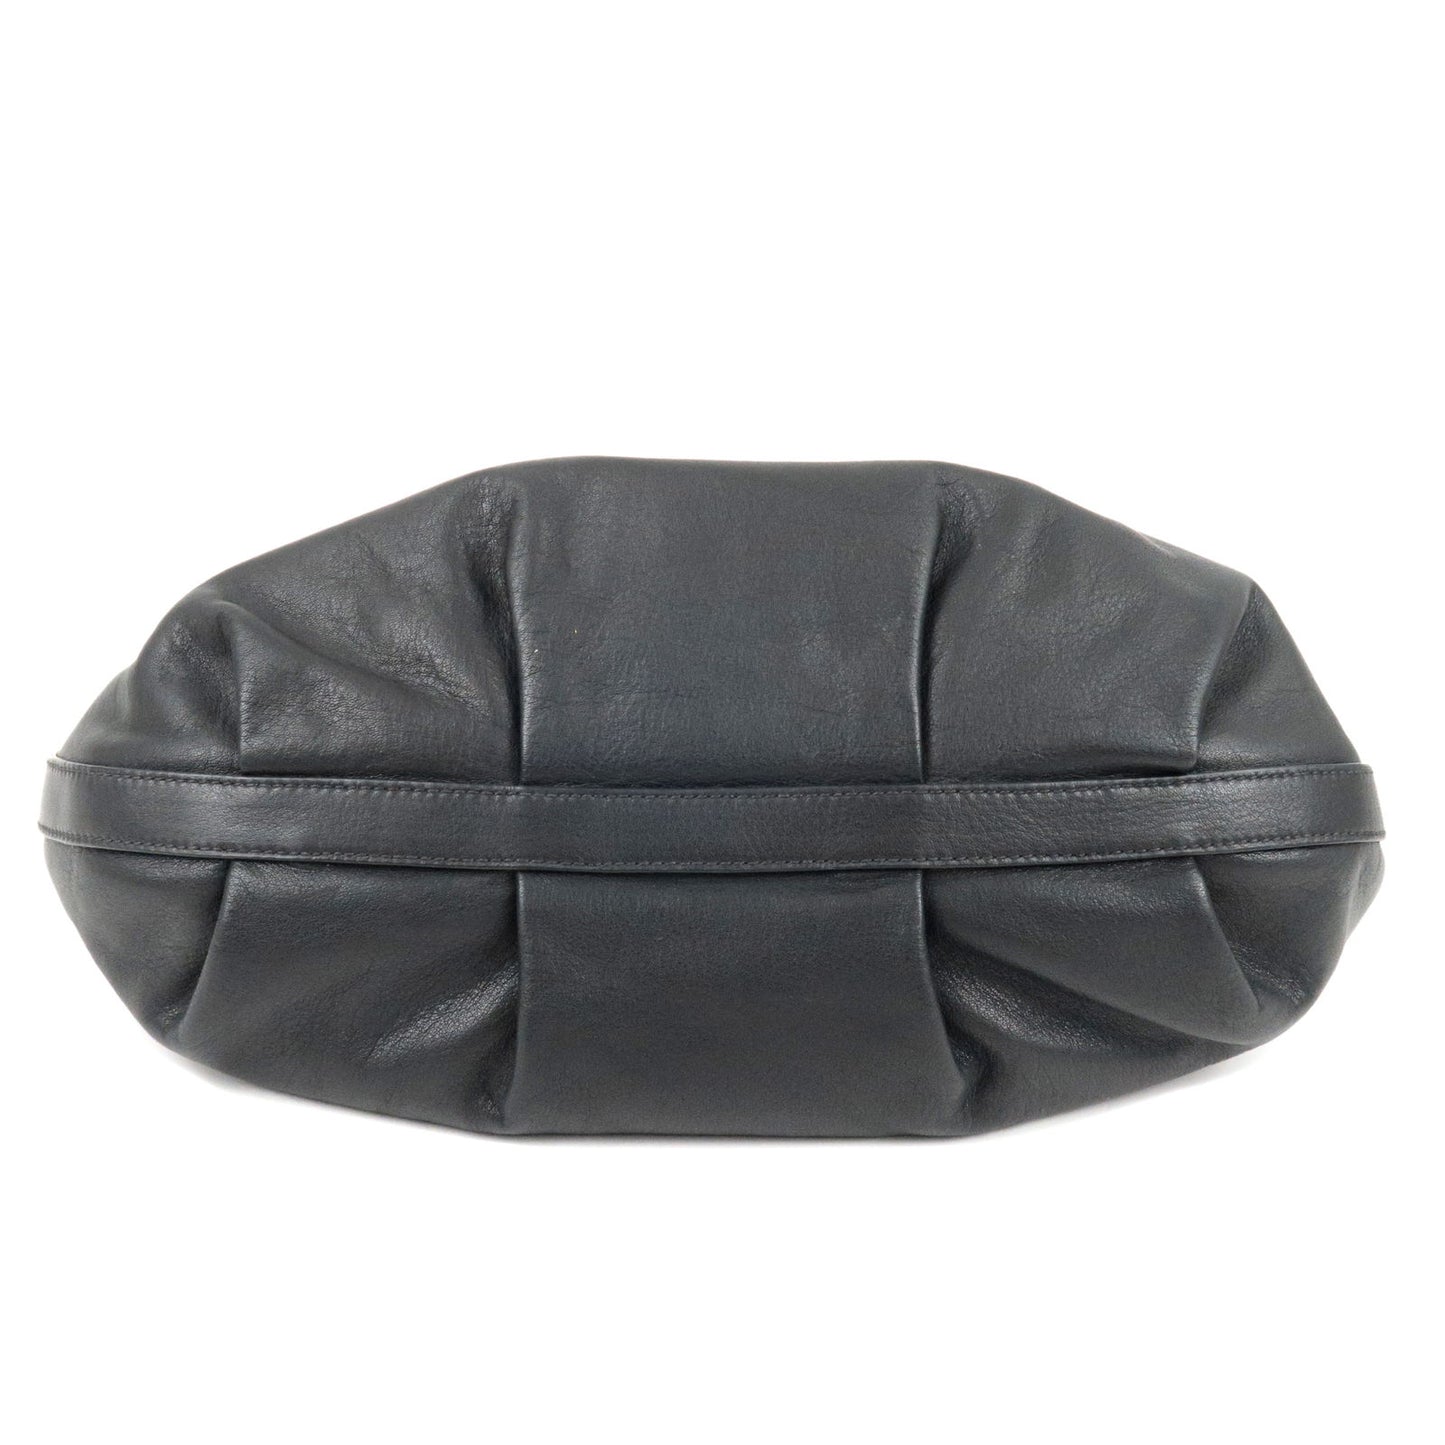 PRADA Calf Leather Shoulder Bag Hand Bag NERO Black BR4070